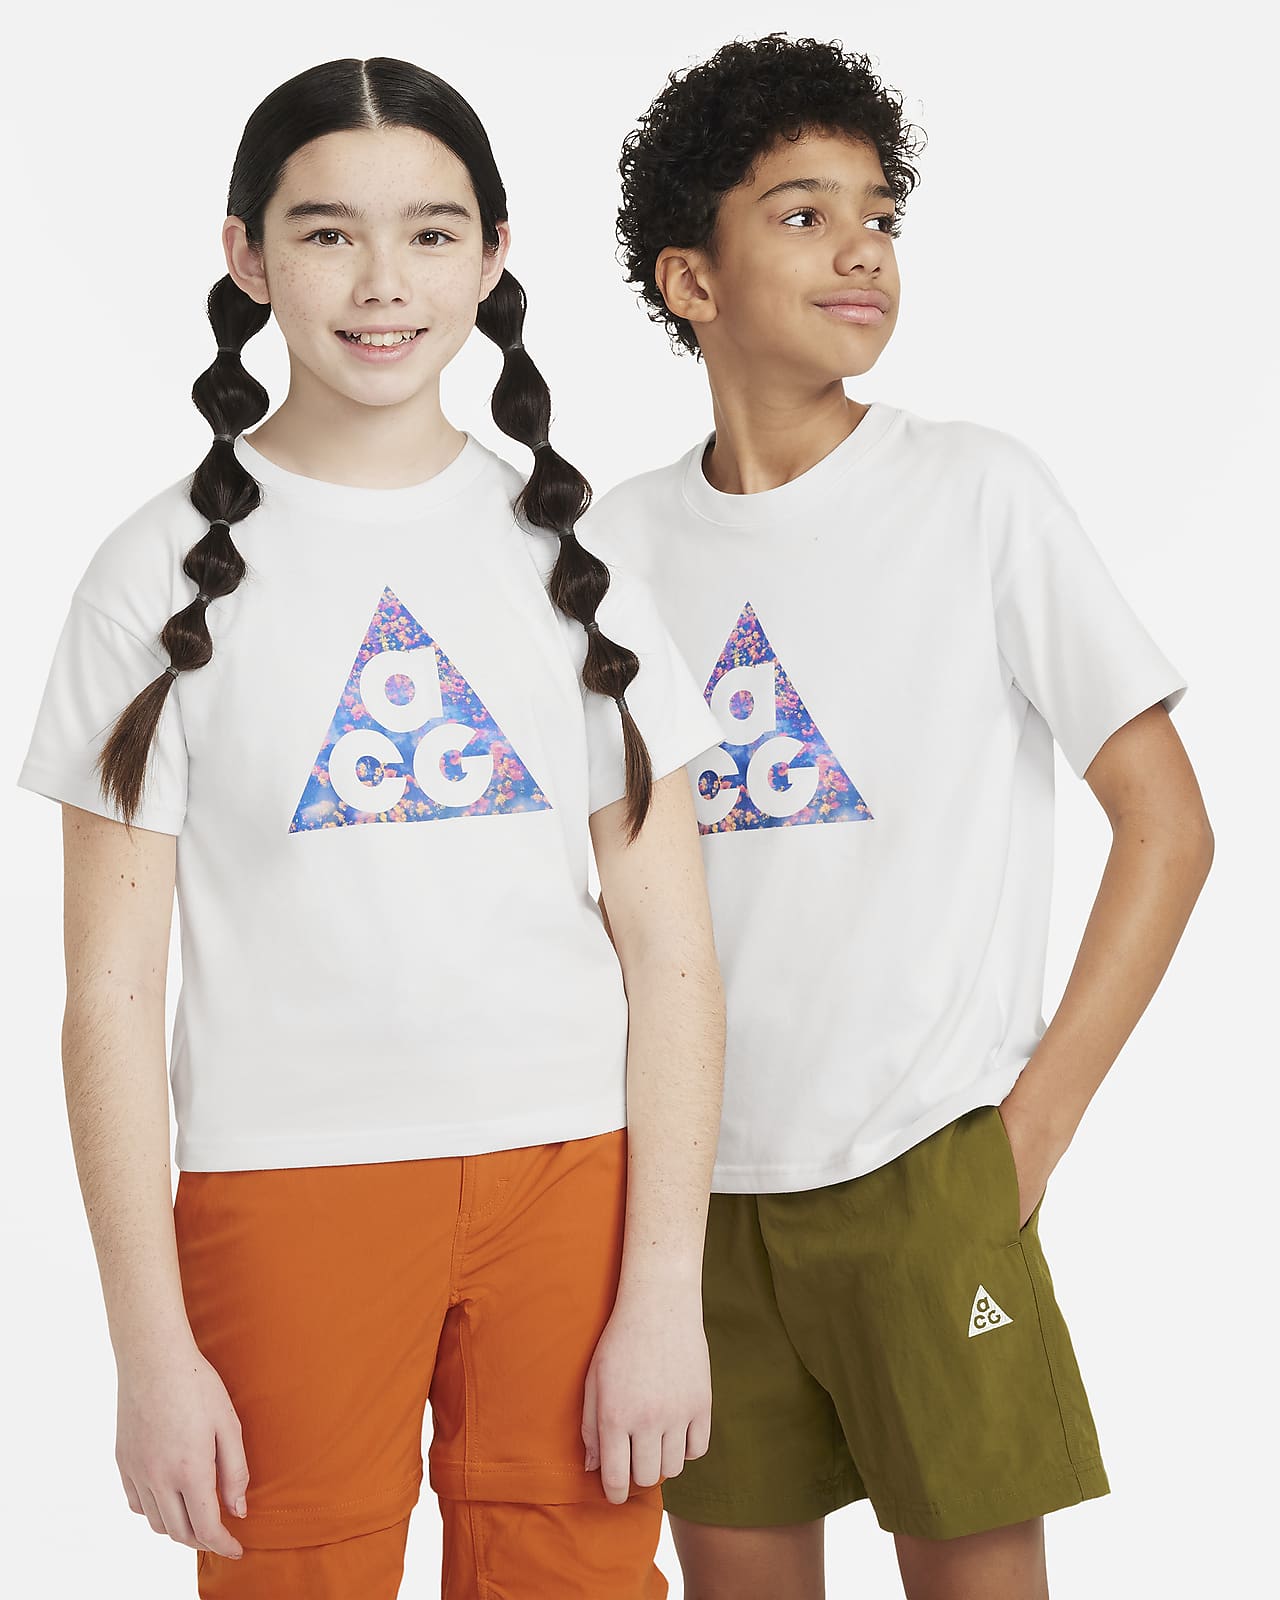 T-shirt Nike ACG för ungdom